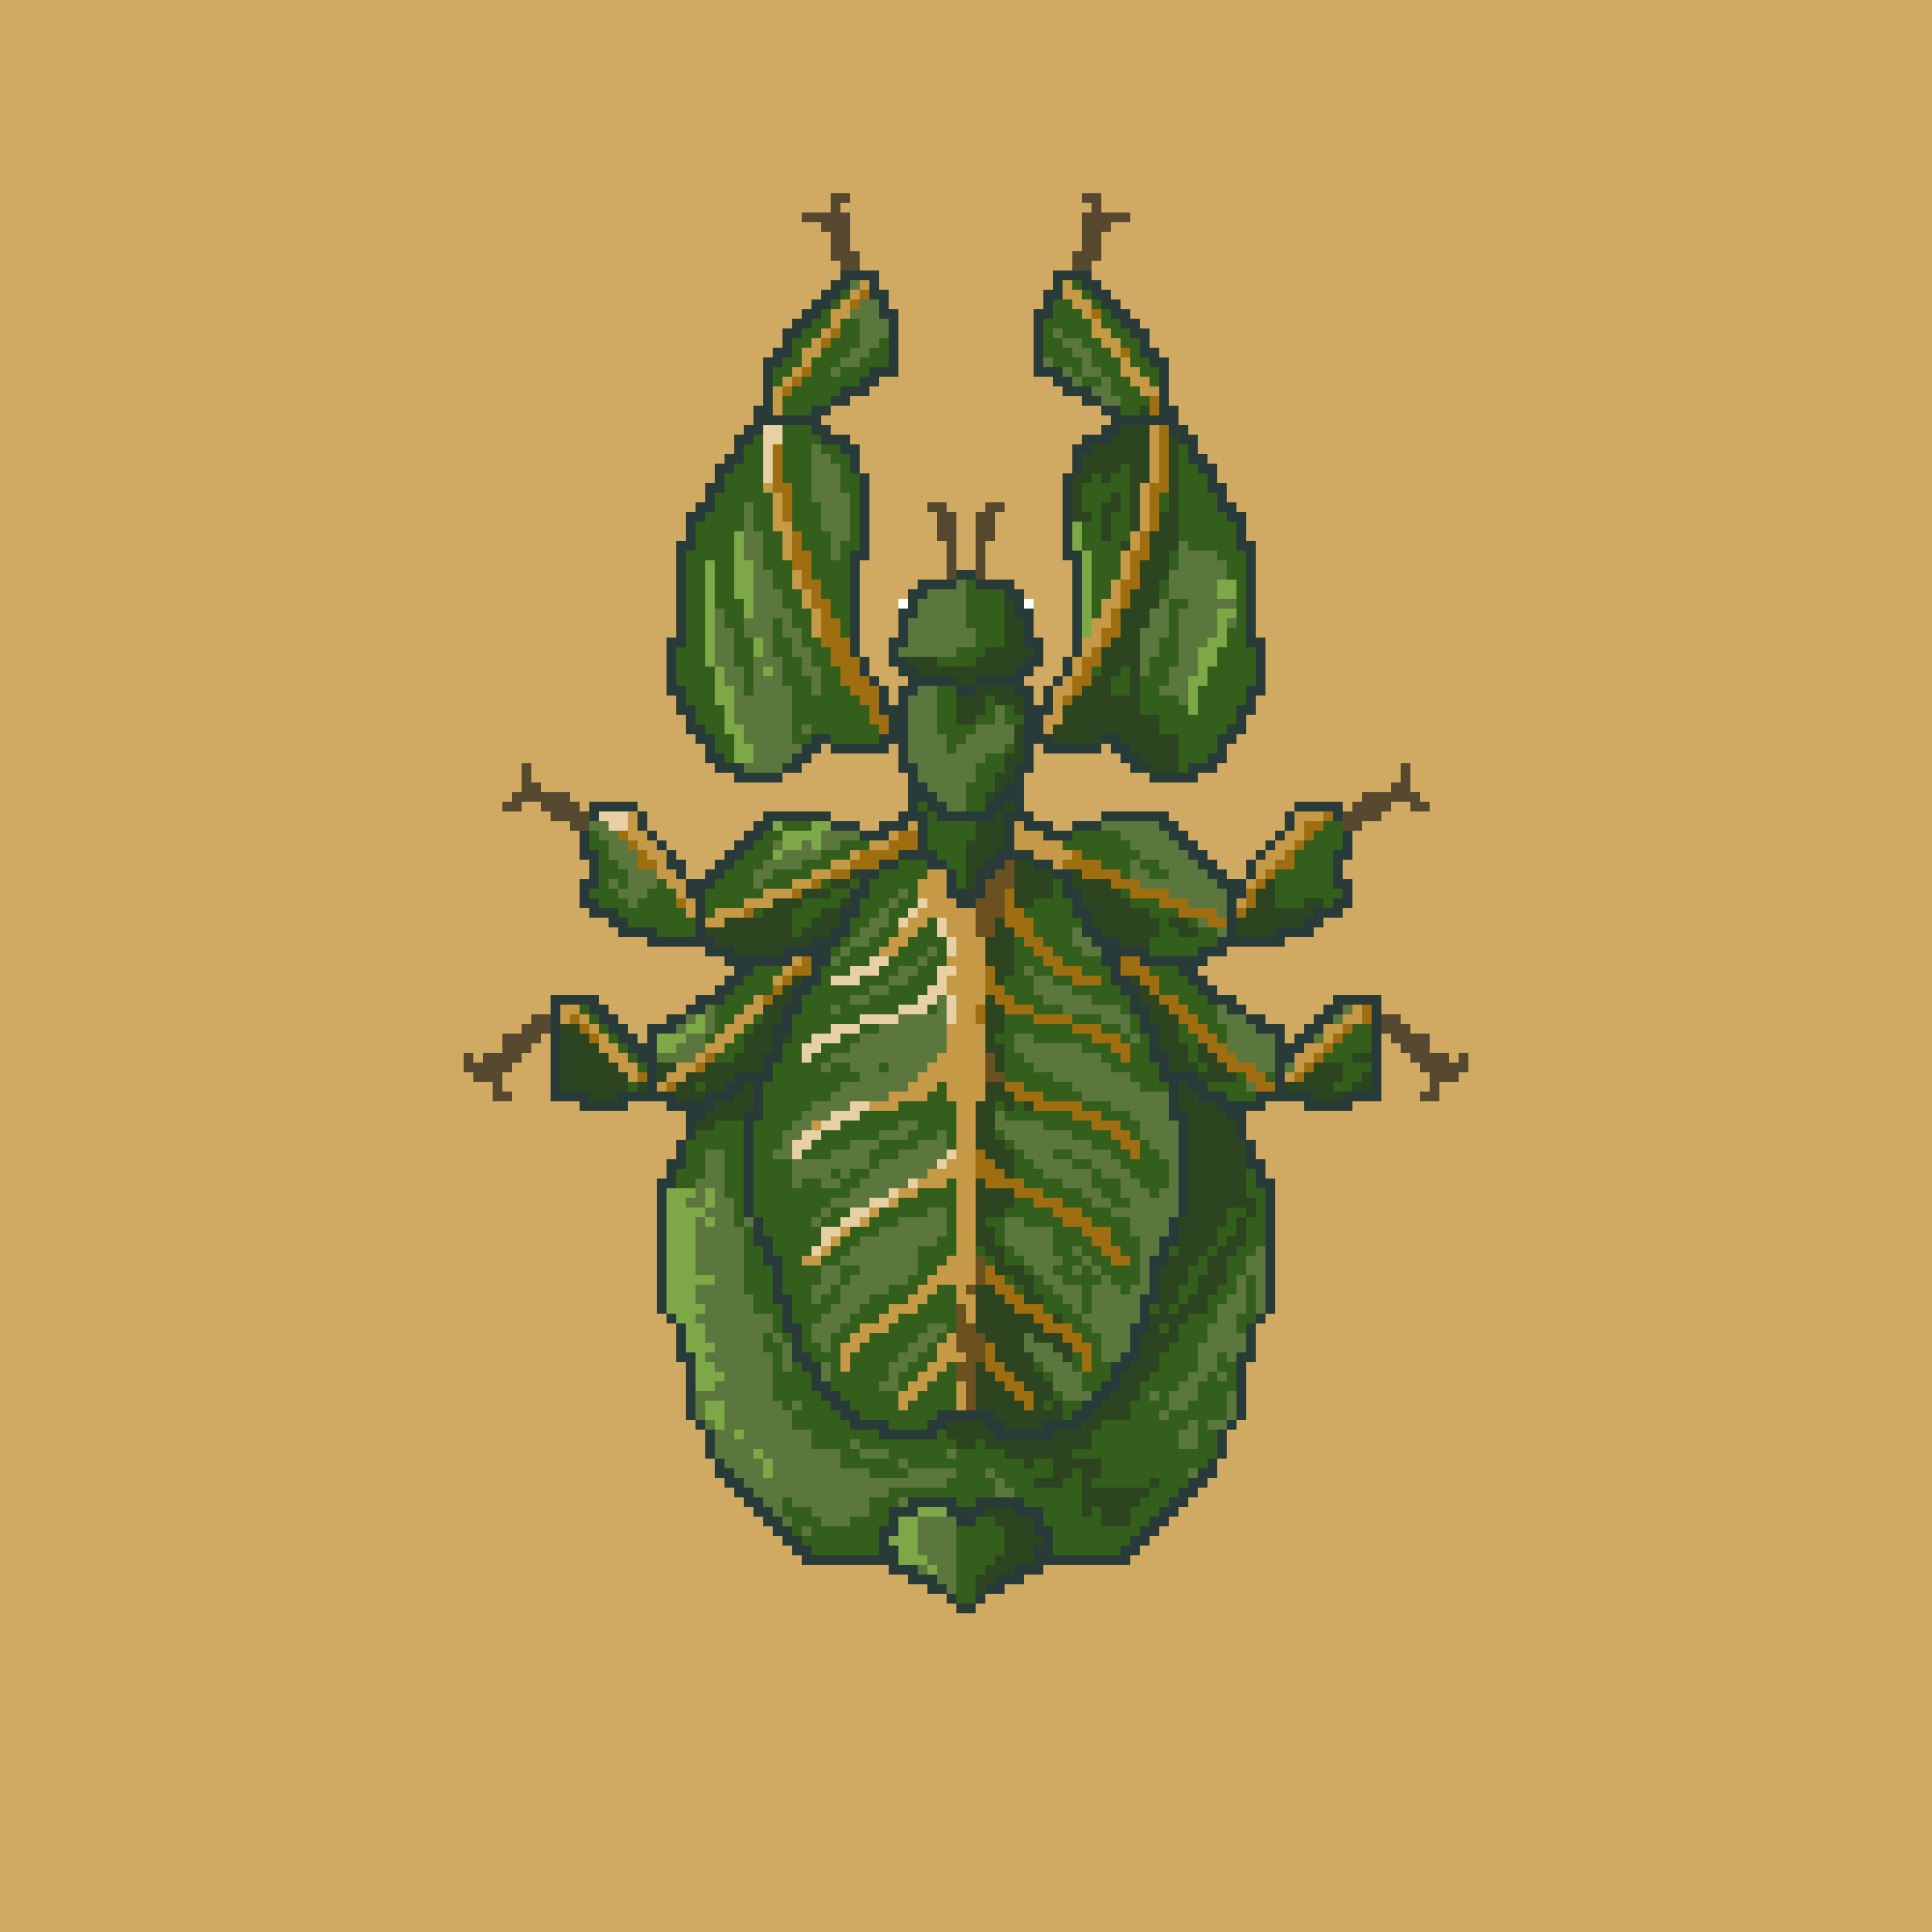 A Boring Leafbug